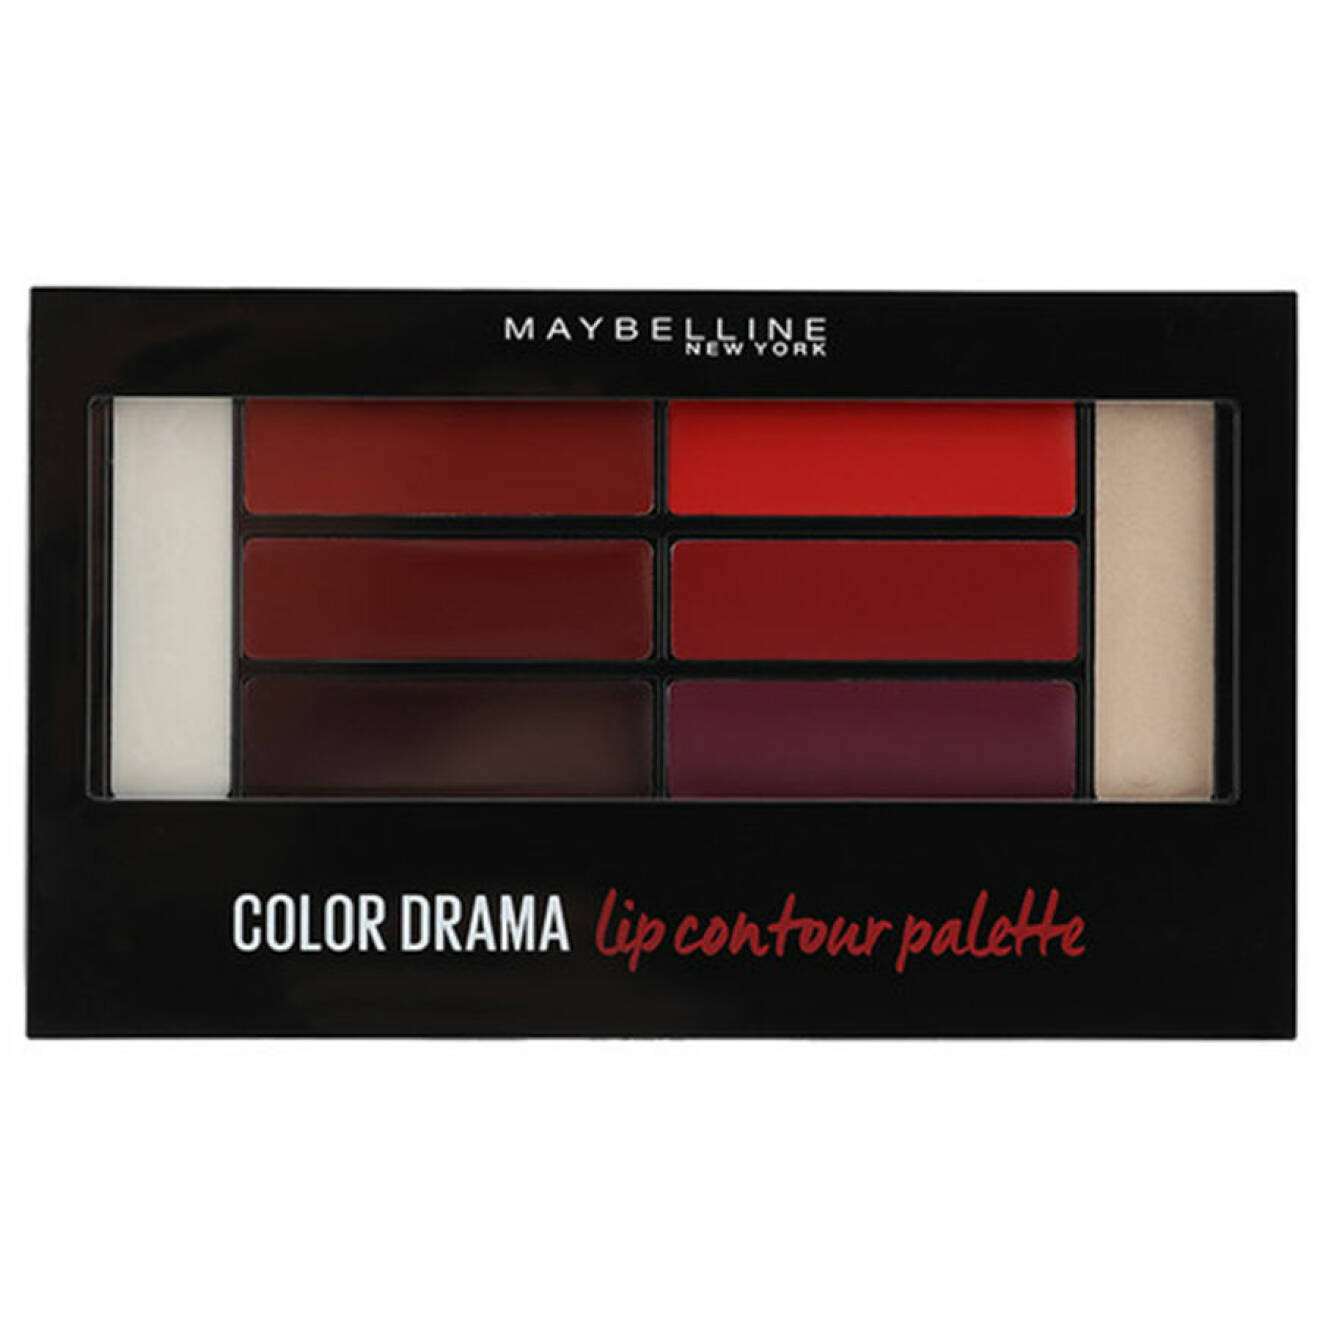 Maybelline Color drama lip contour palette, 139 kronor.